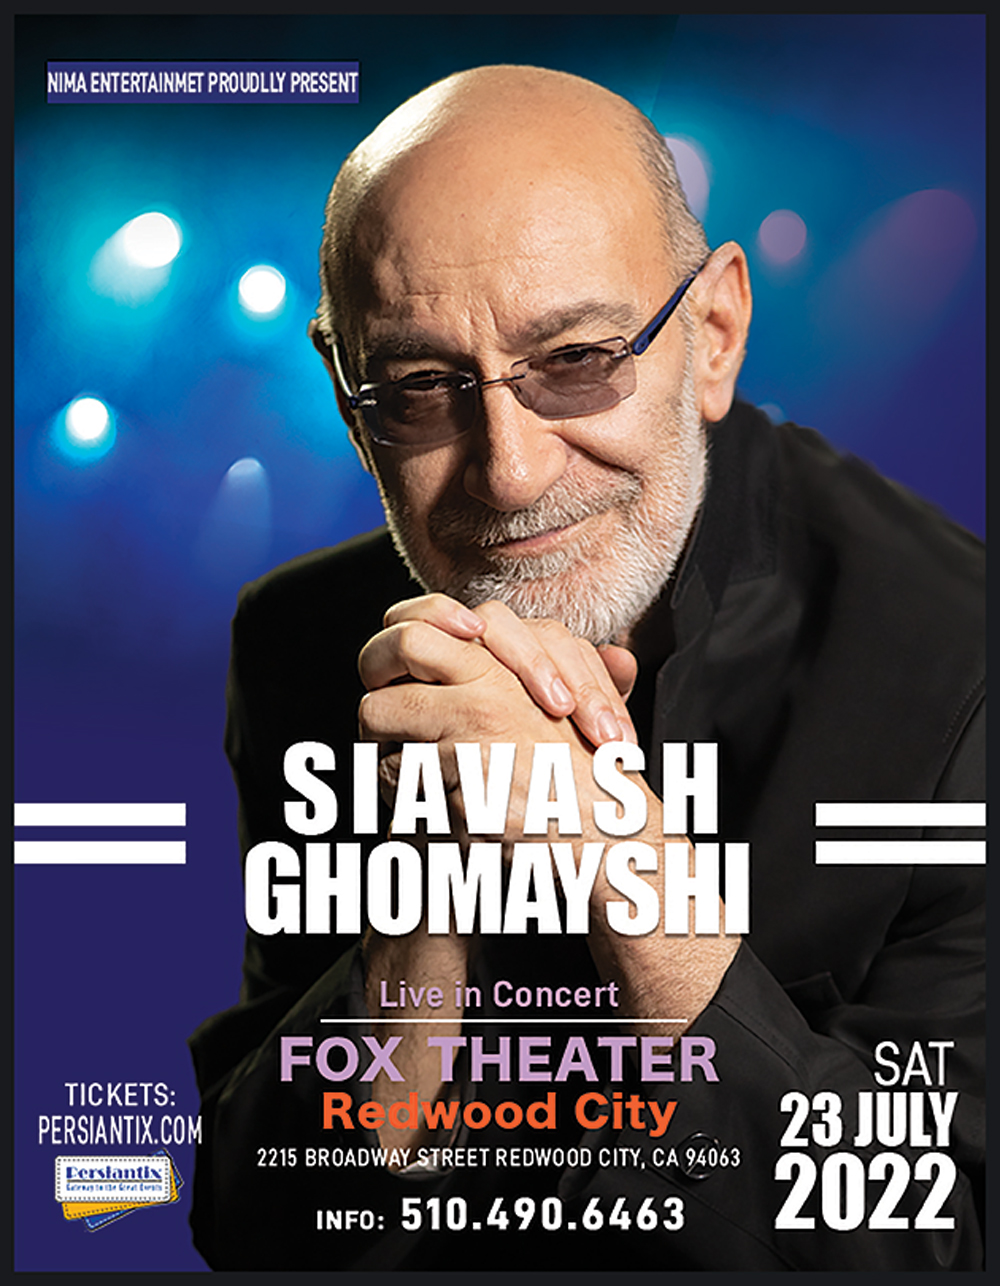 Siavash Ghomayshi Live in Concert REDWOOD CITY persiantix persiantix